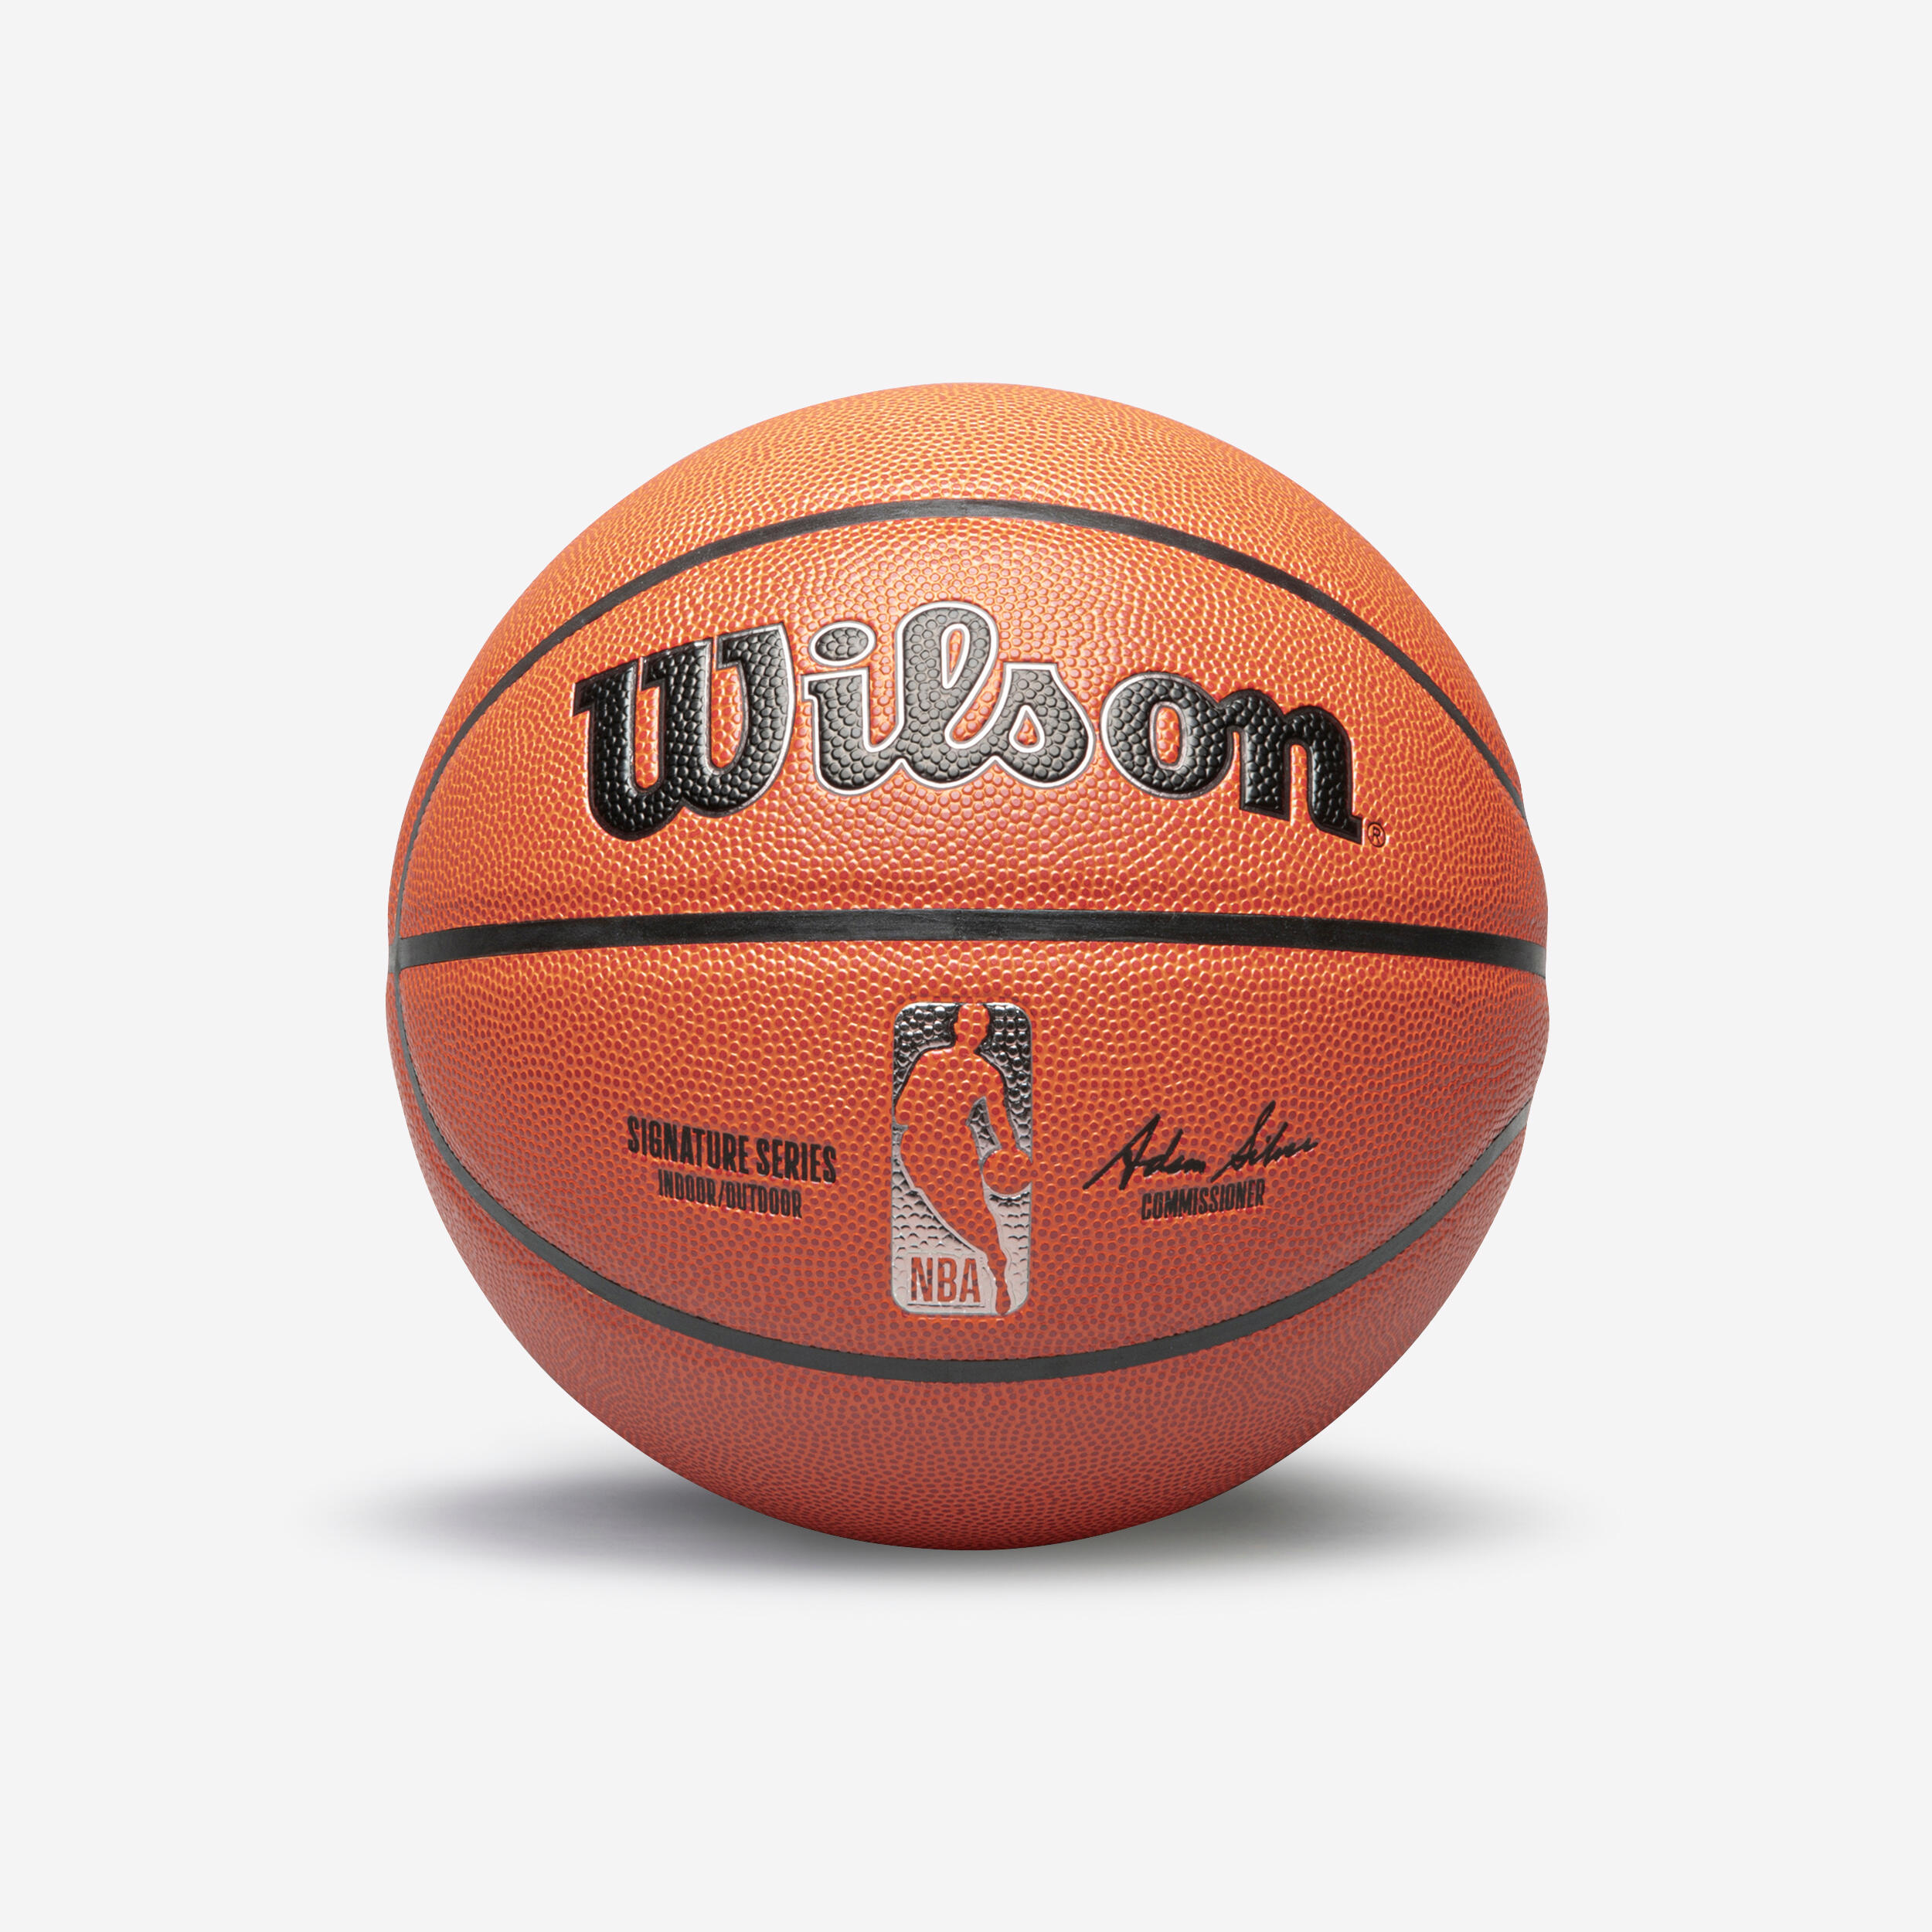 Minge Baschet WILSON NBA Signature Series Mărimea 7